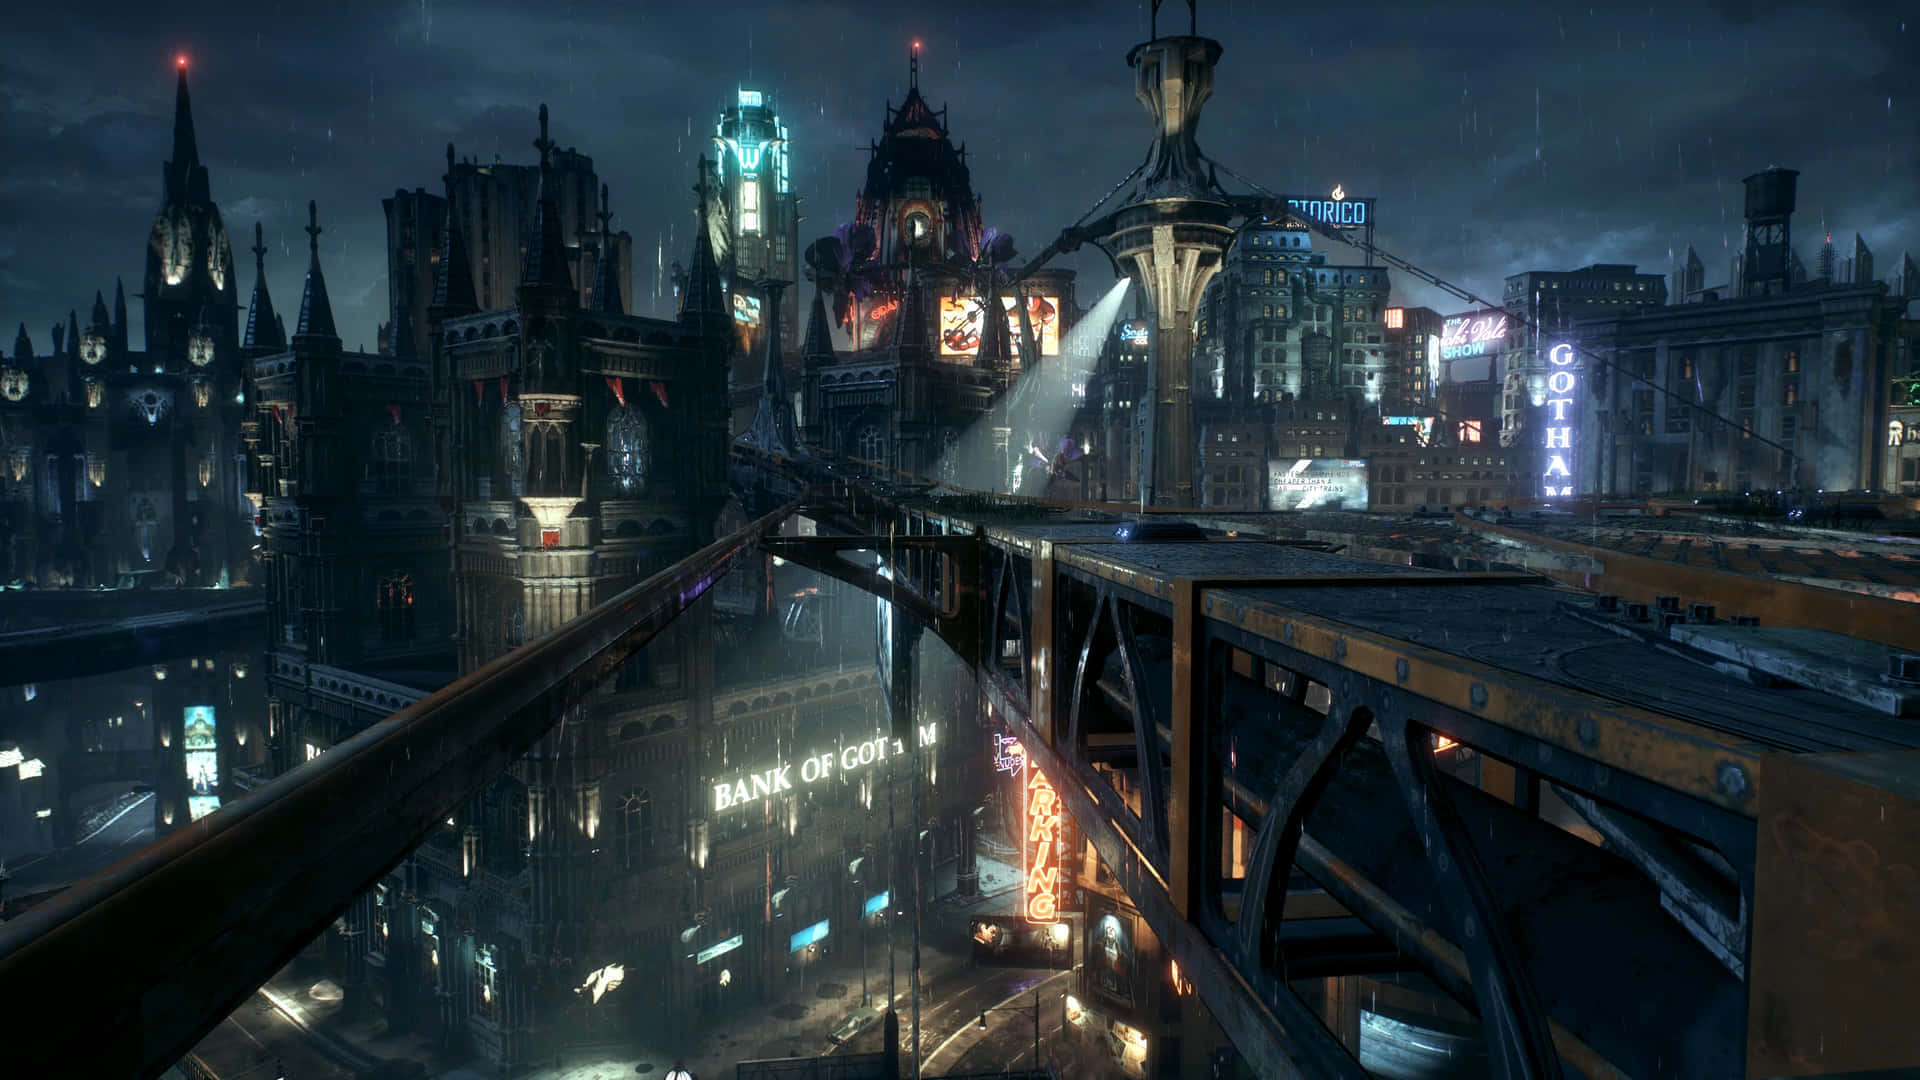 Paisajenocturno Misterioso De Gotham City